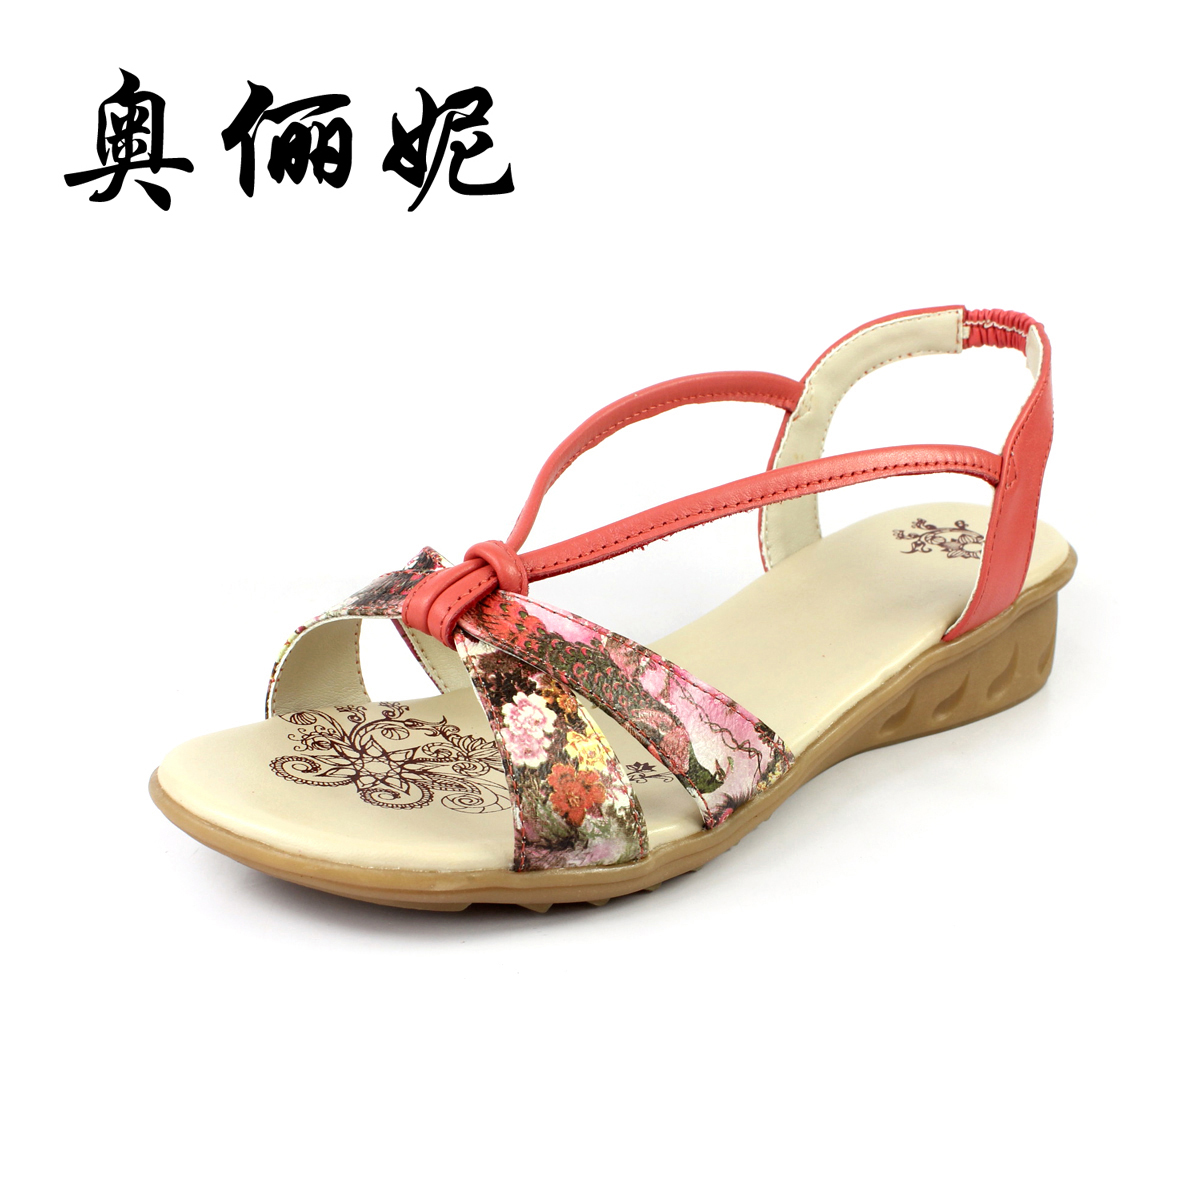 ... -Fashion-Sandals-Flat-Women-s-Summer-Shoes-Bohemian-Style-Roman